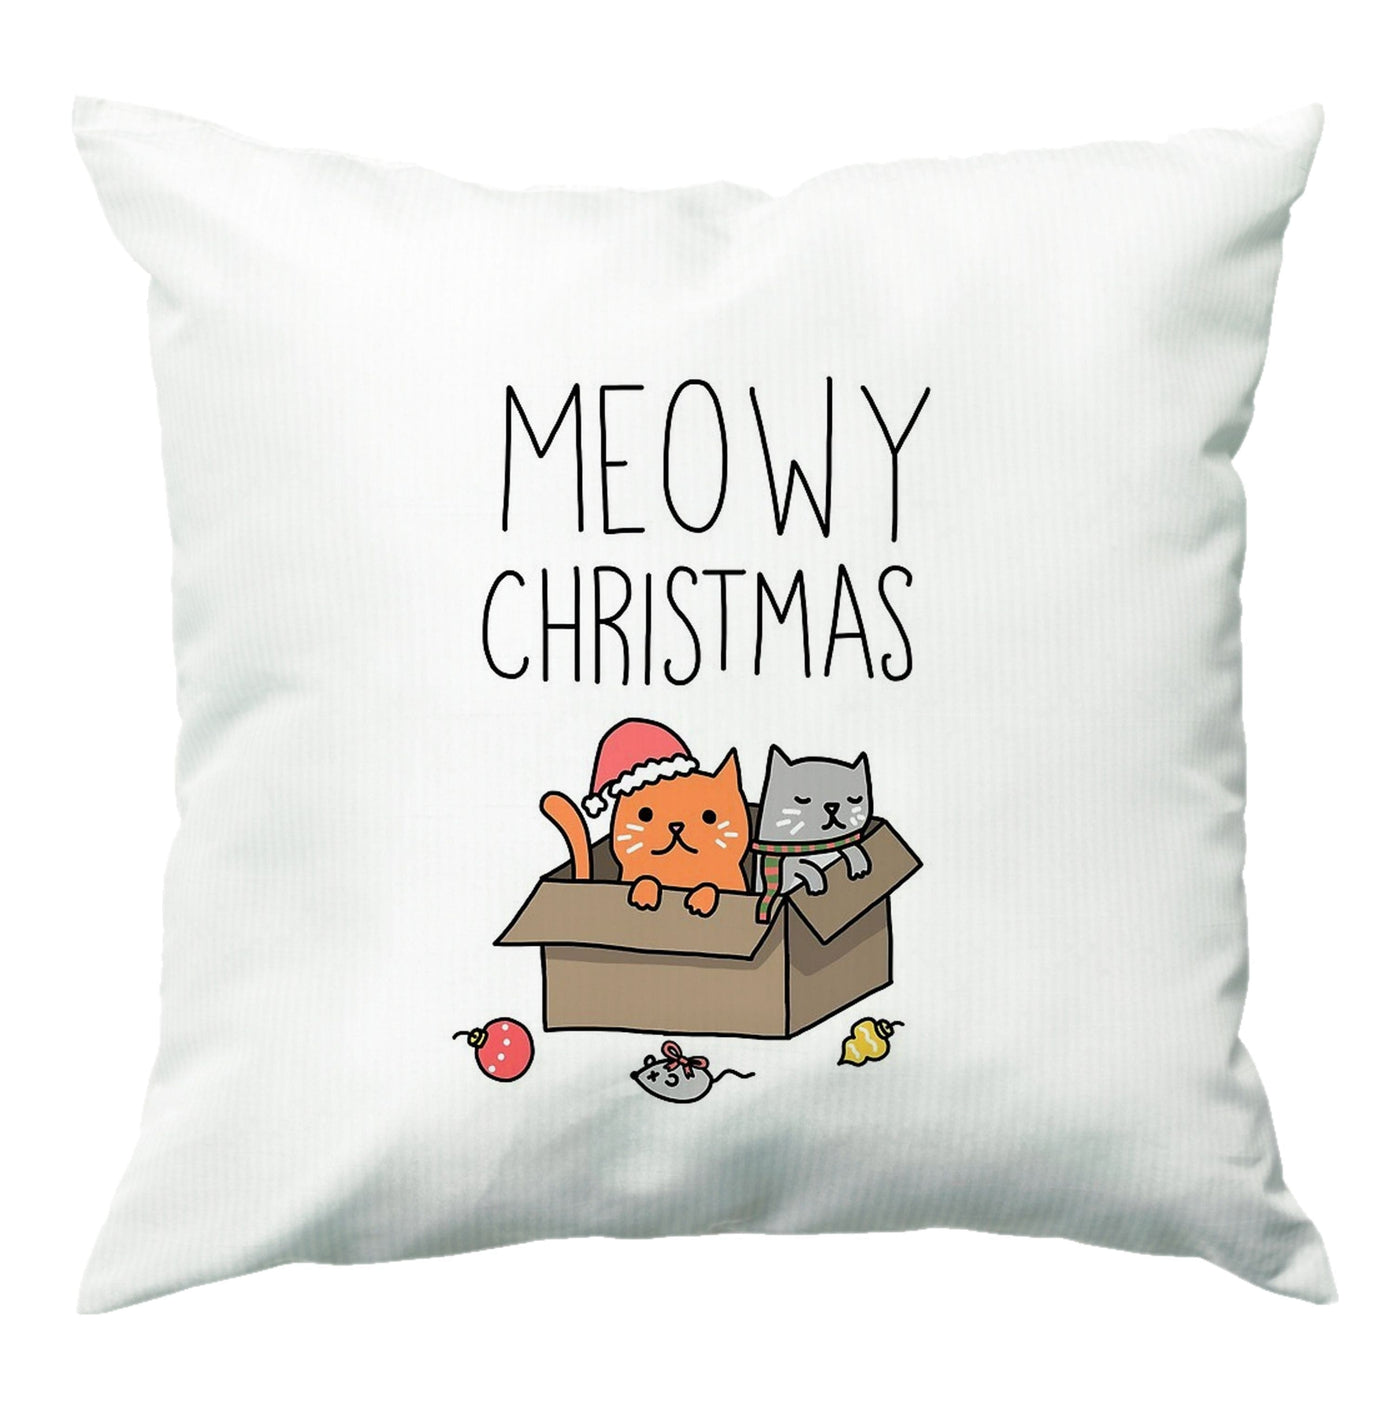 Meowy Christmas Cushion